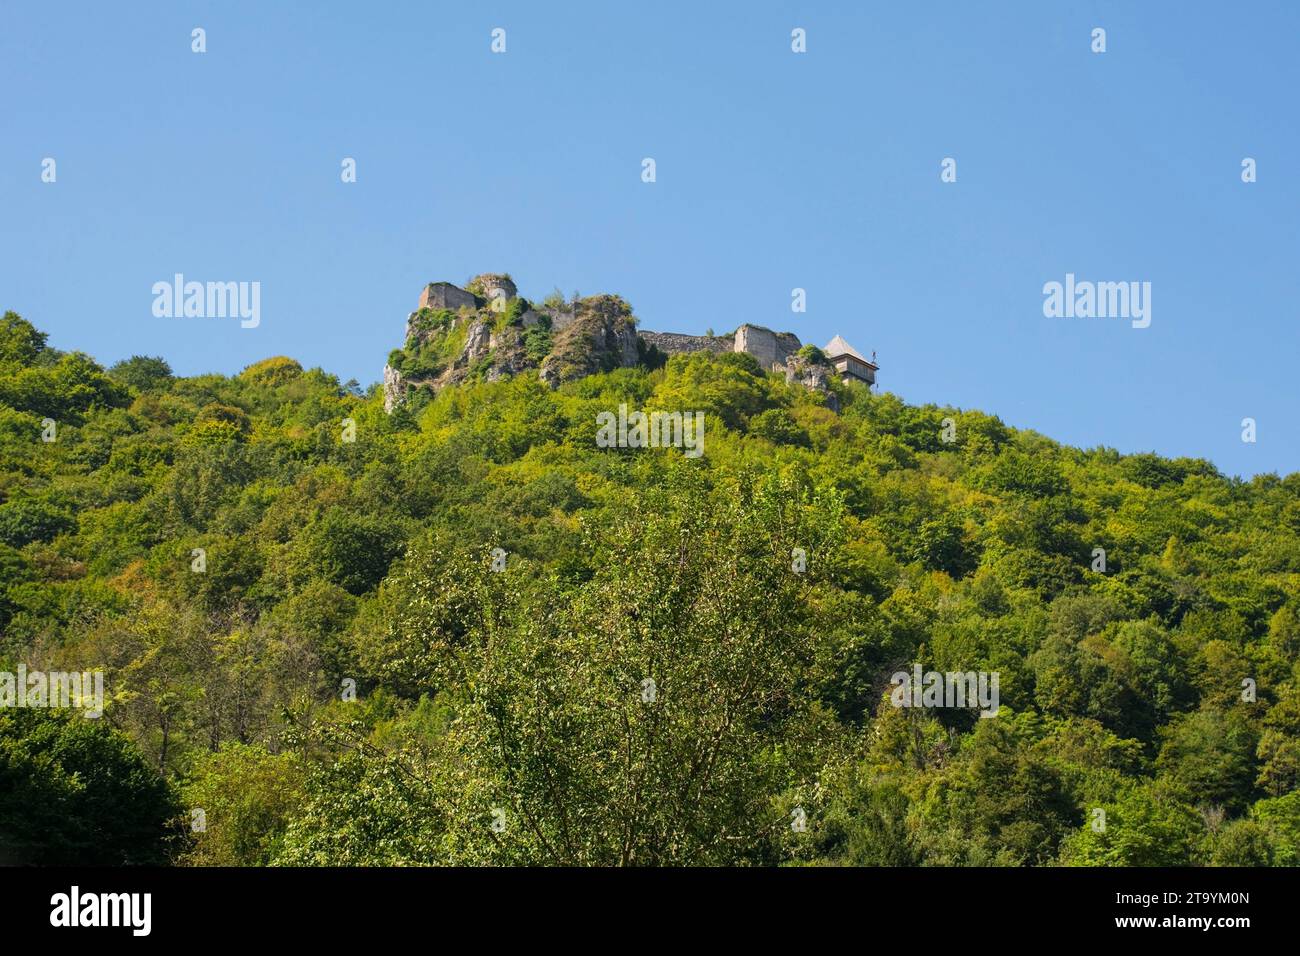 The historic 15th century Ostrovica Castle overlooking Kulen Vakuf village in Una National Park. Una-Sana Canton, Federation of Bosnia and Herzegovina Stock Photo